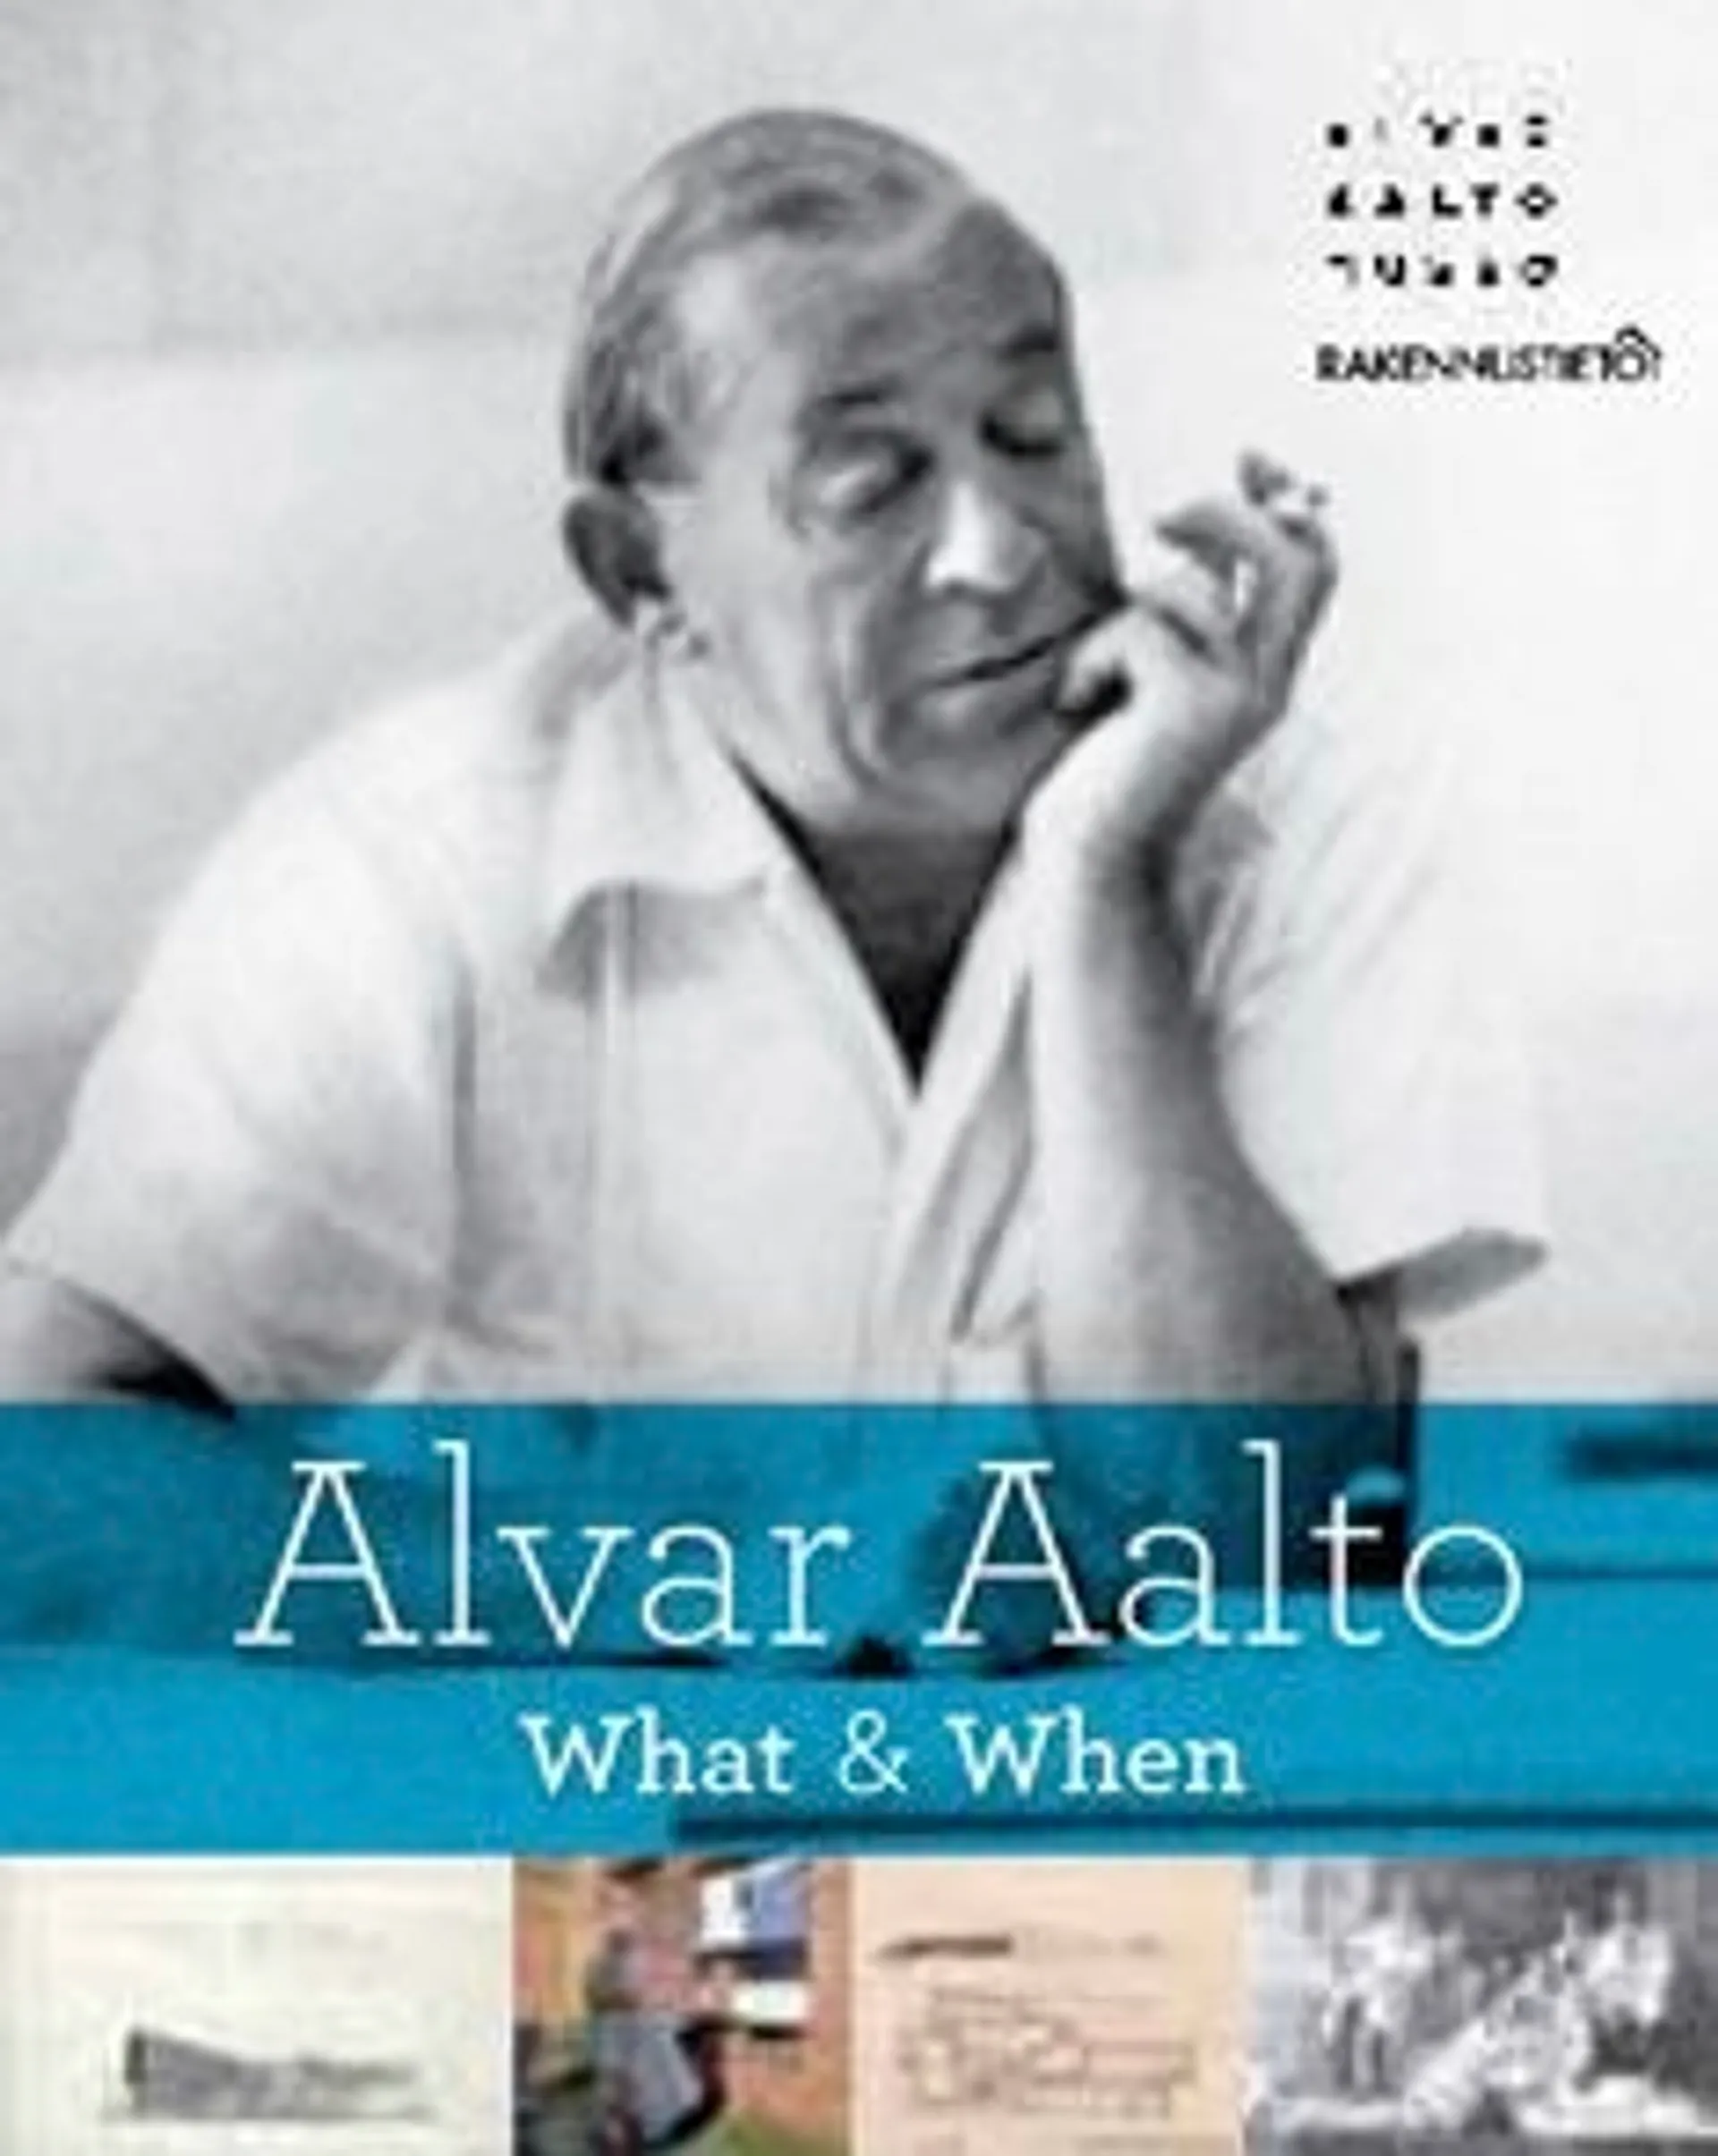 Alvar Aalto - What & When